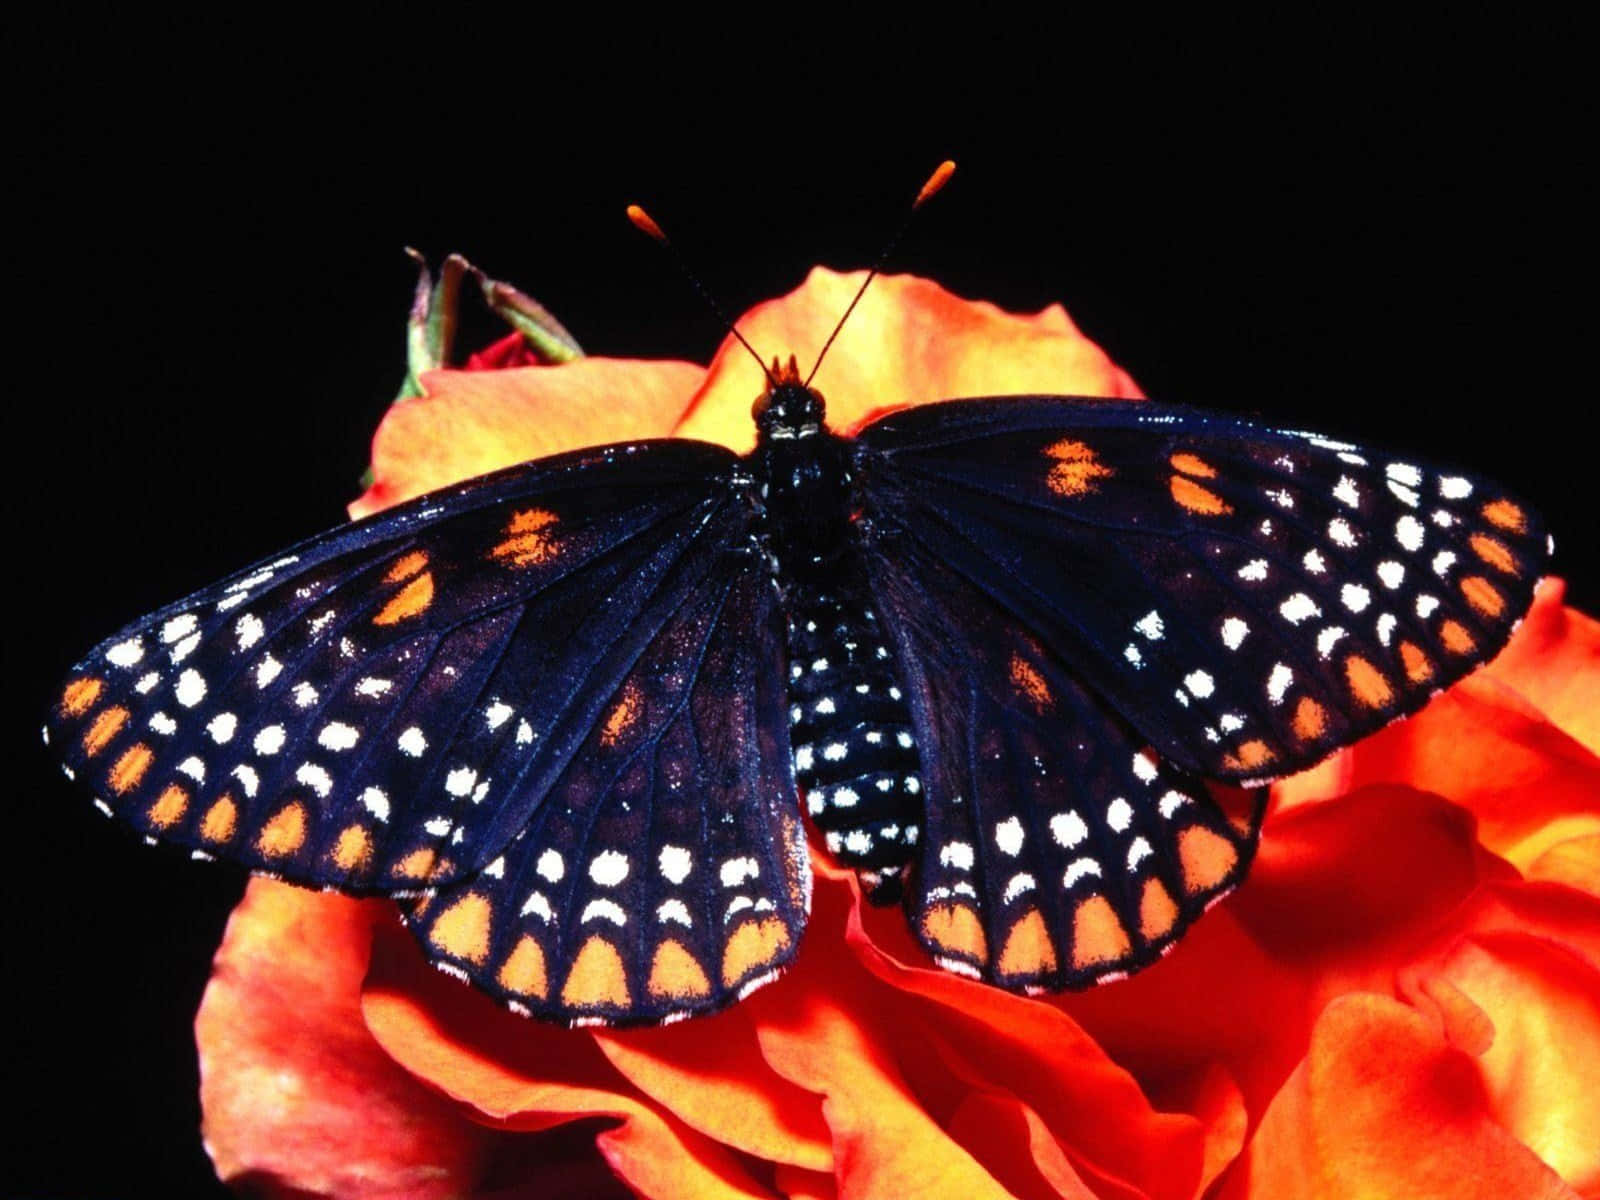 A Beautiful Butterfly Drifting Through the Air